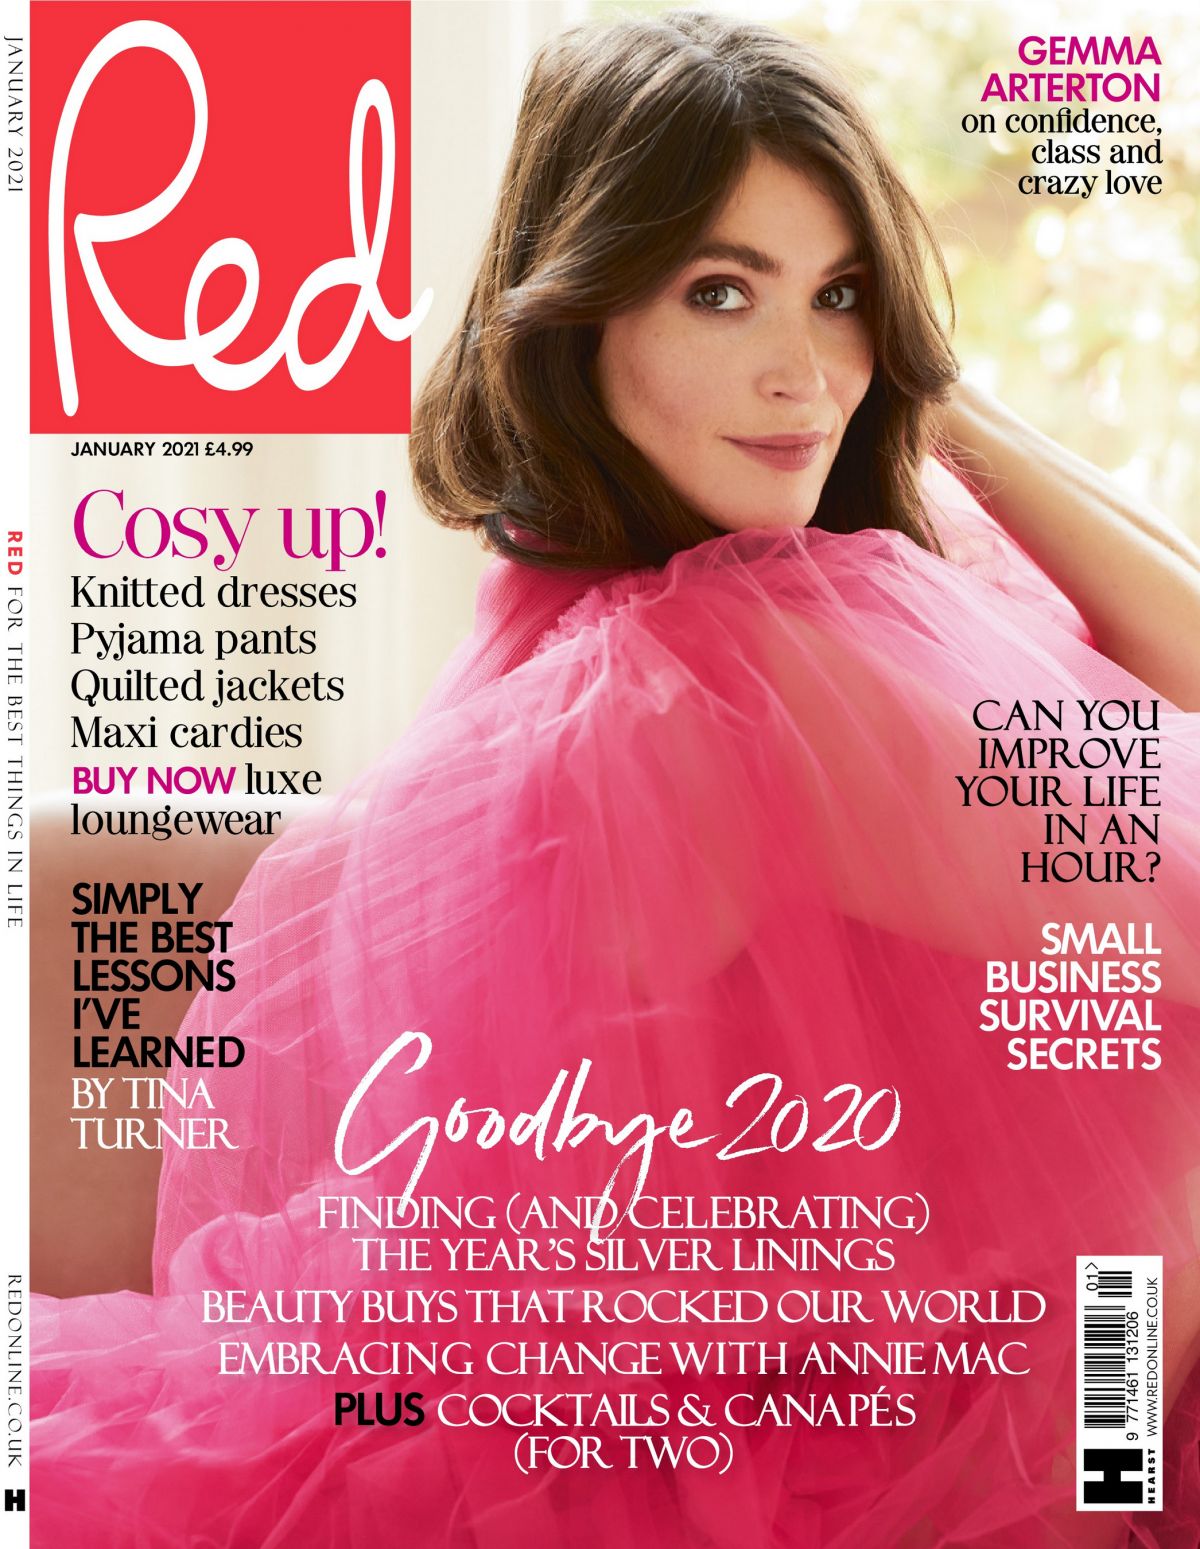 gemma-arterton-in-red-magazine-uk-january-2021-4.jpg